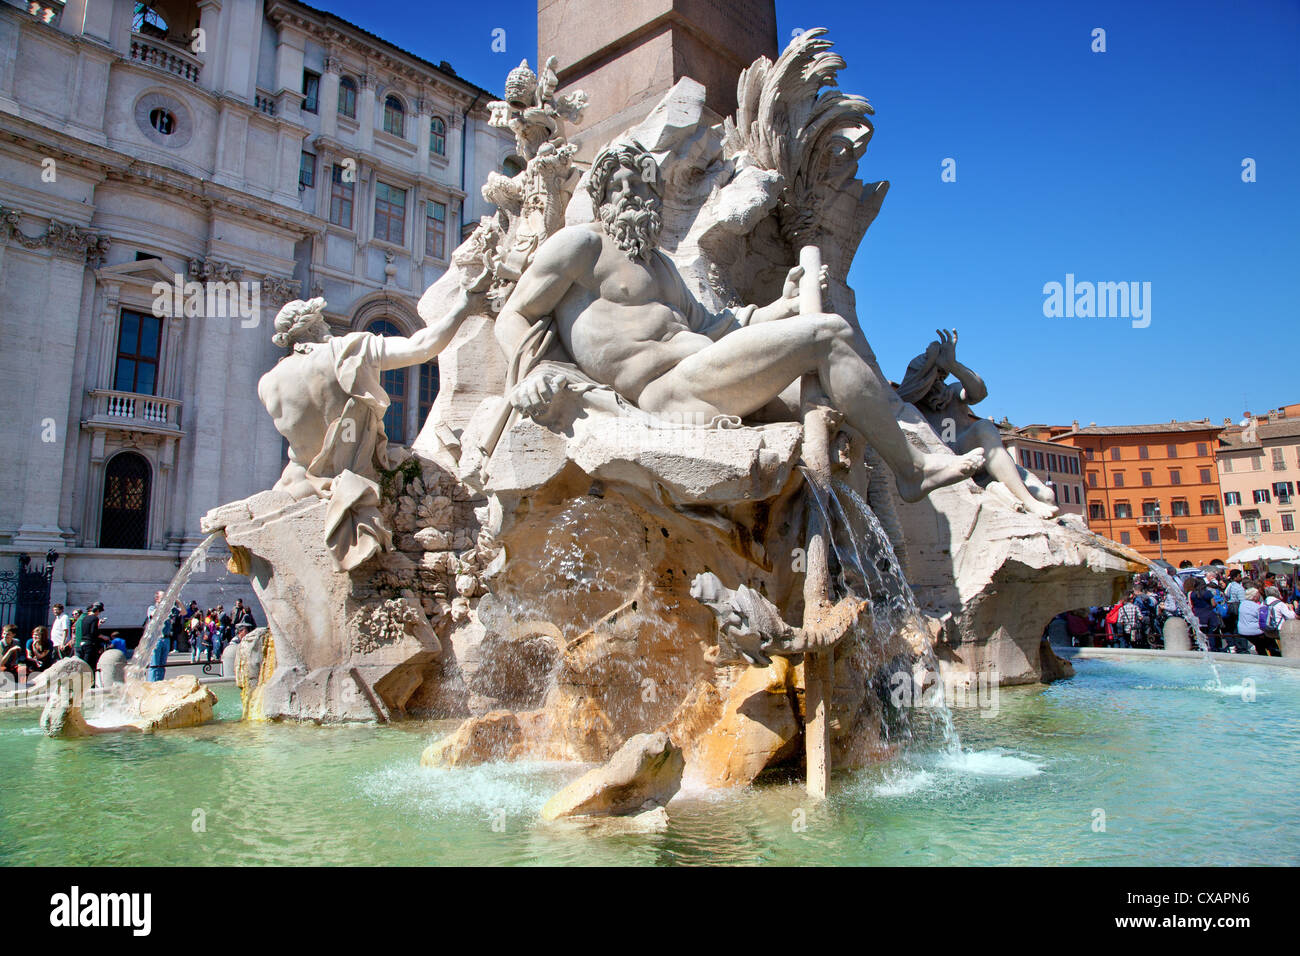 Les quatre fleuves fontaine de la Piazza Navona, Rome, Latium, Italie, Europe Banque D'Images